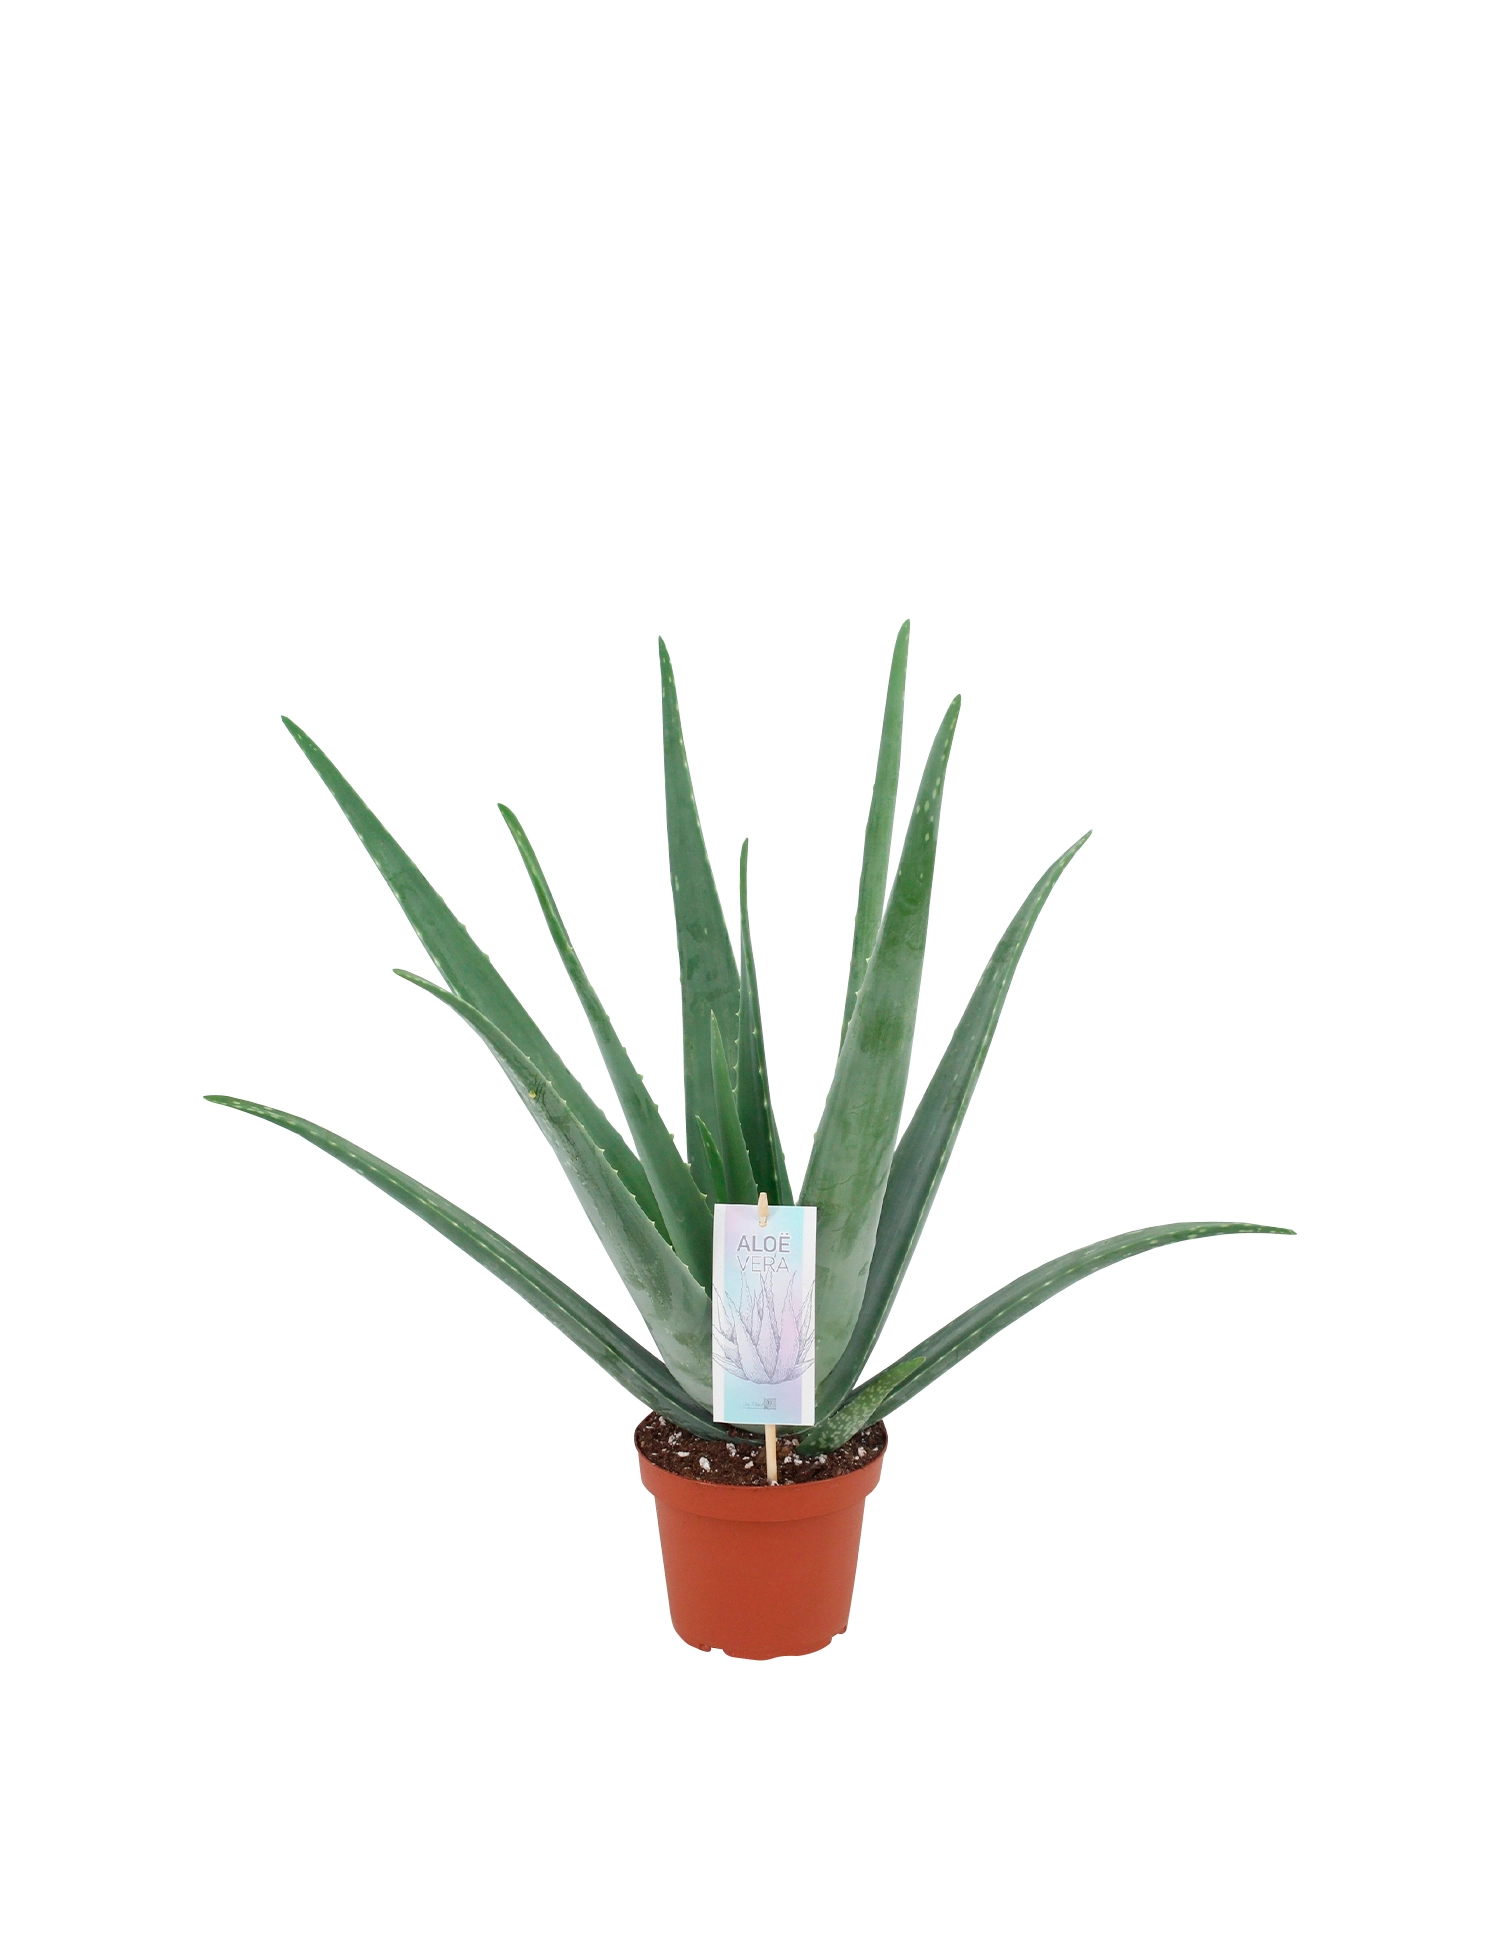 Woods manuskript kæmpe stor Aloe vera, Aloe vera, Ø13 cm potte